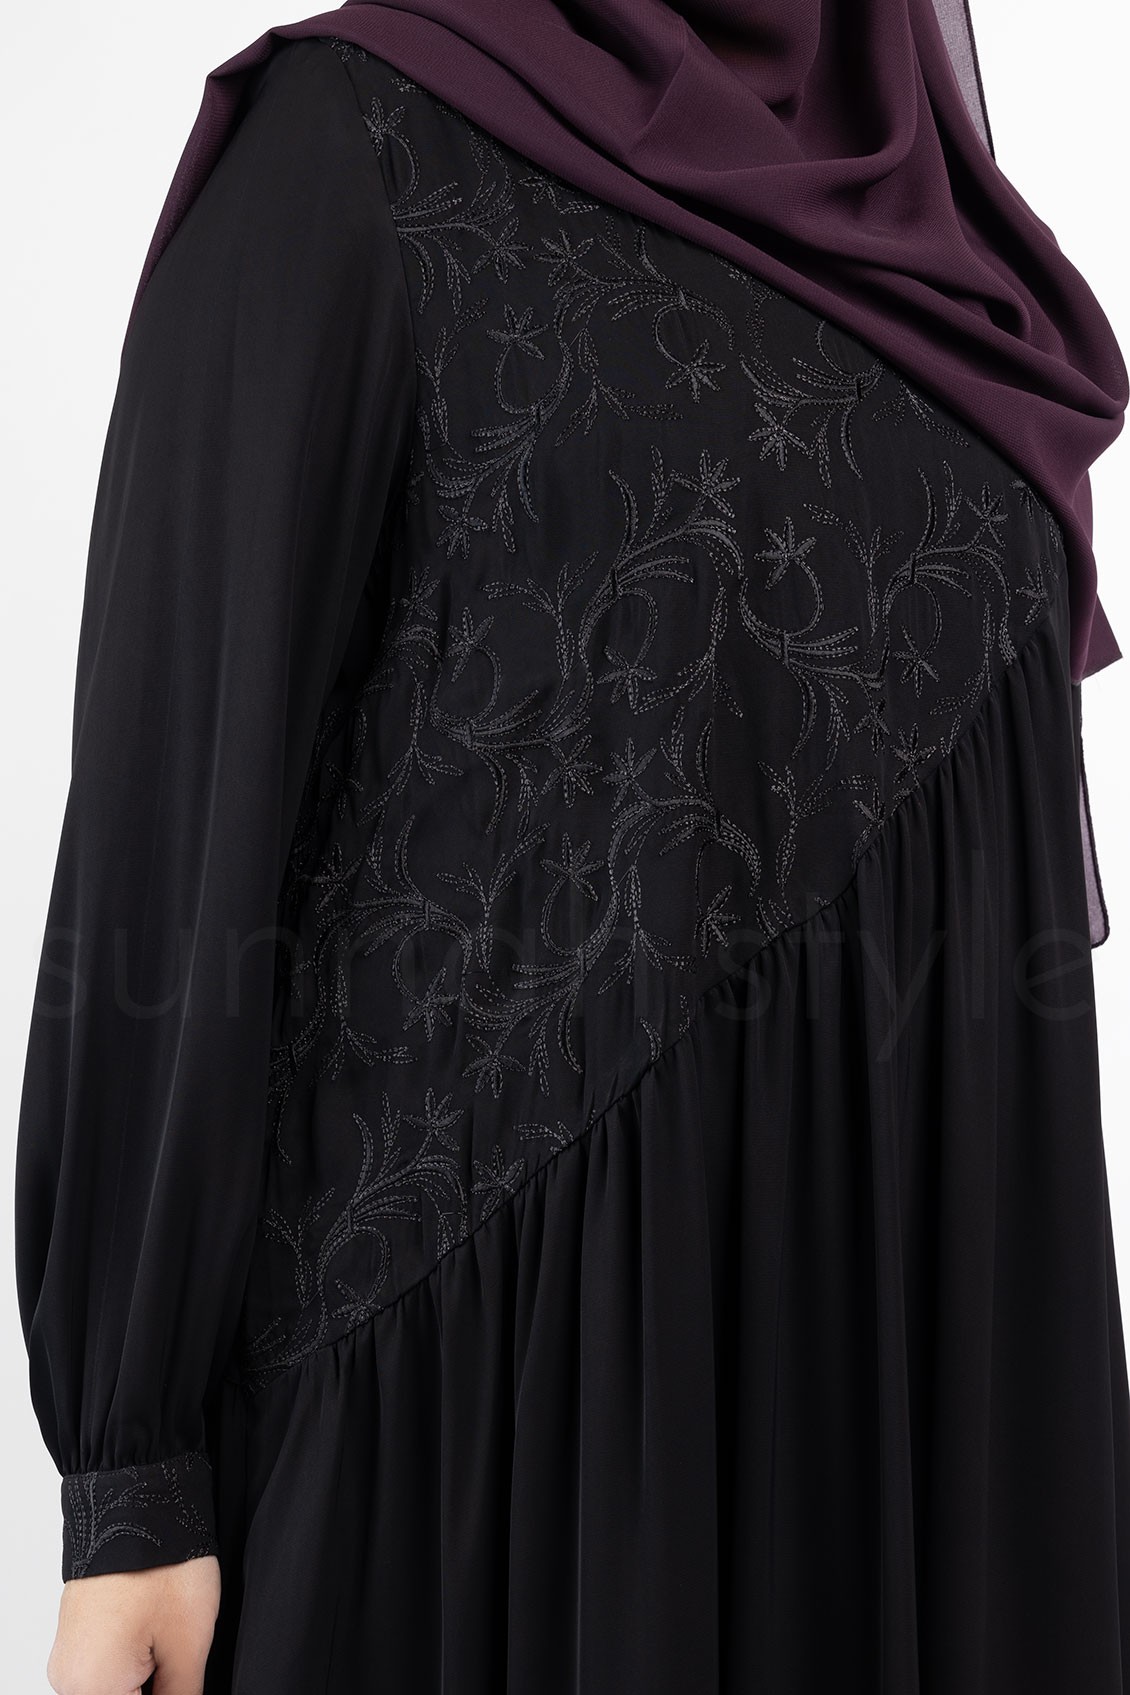 Sunnah Style Floral Umbrella Abaya Black Embroidered